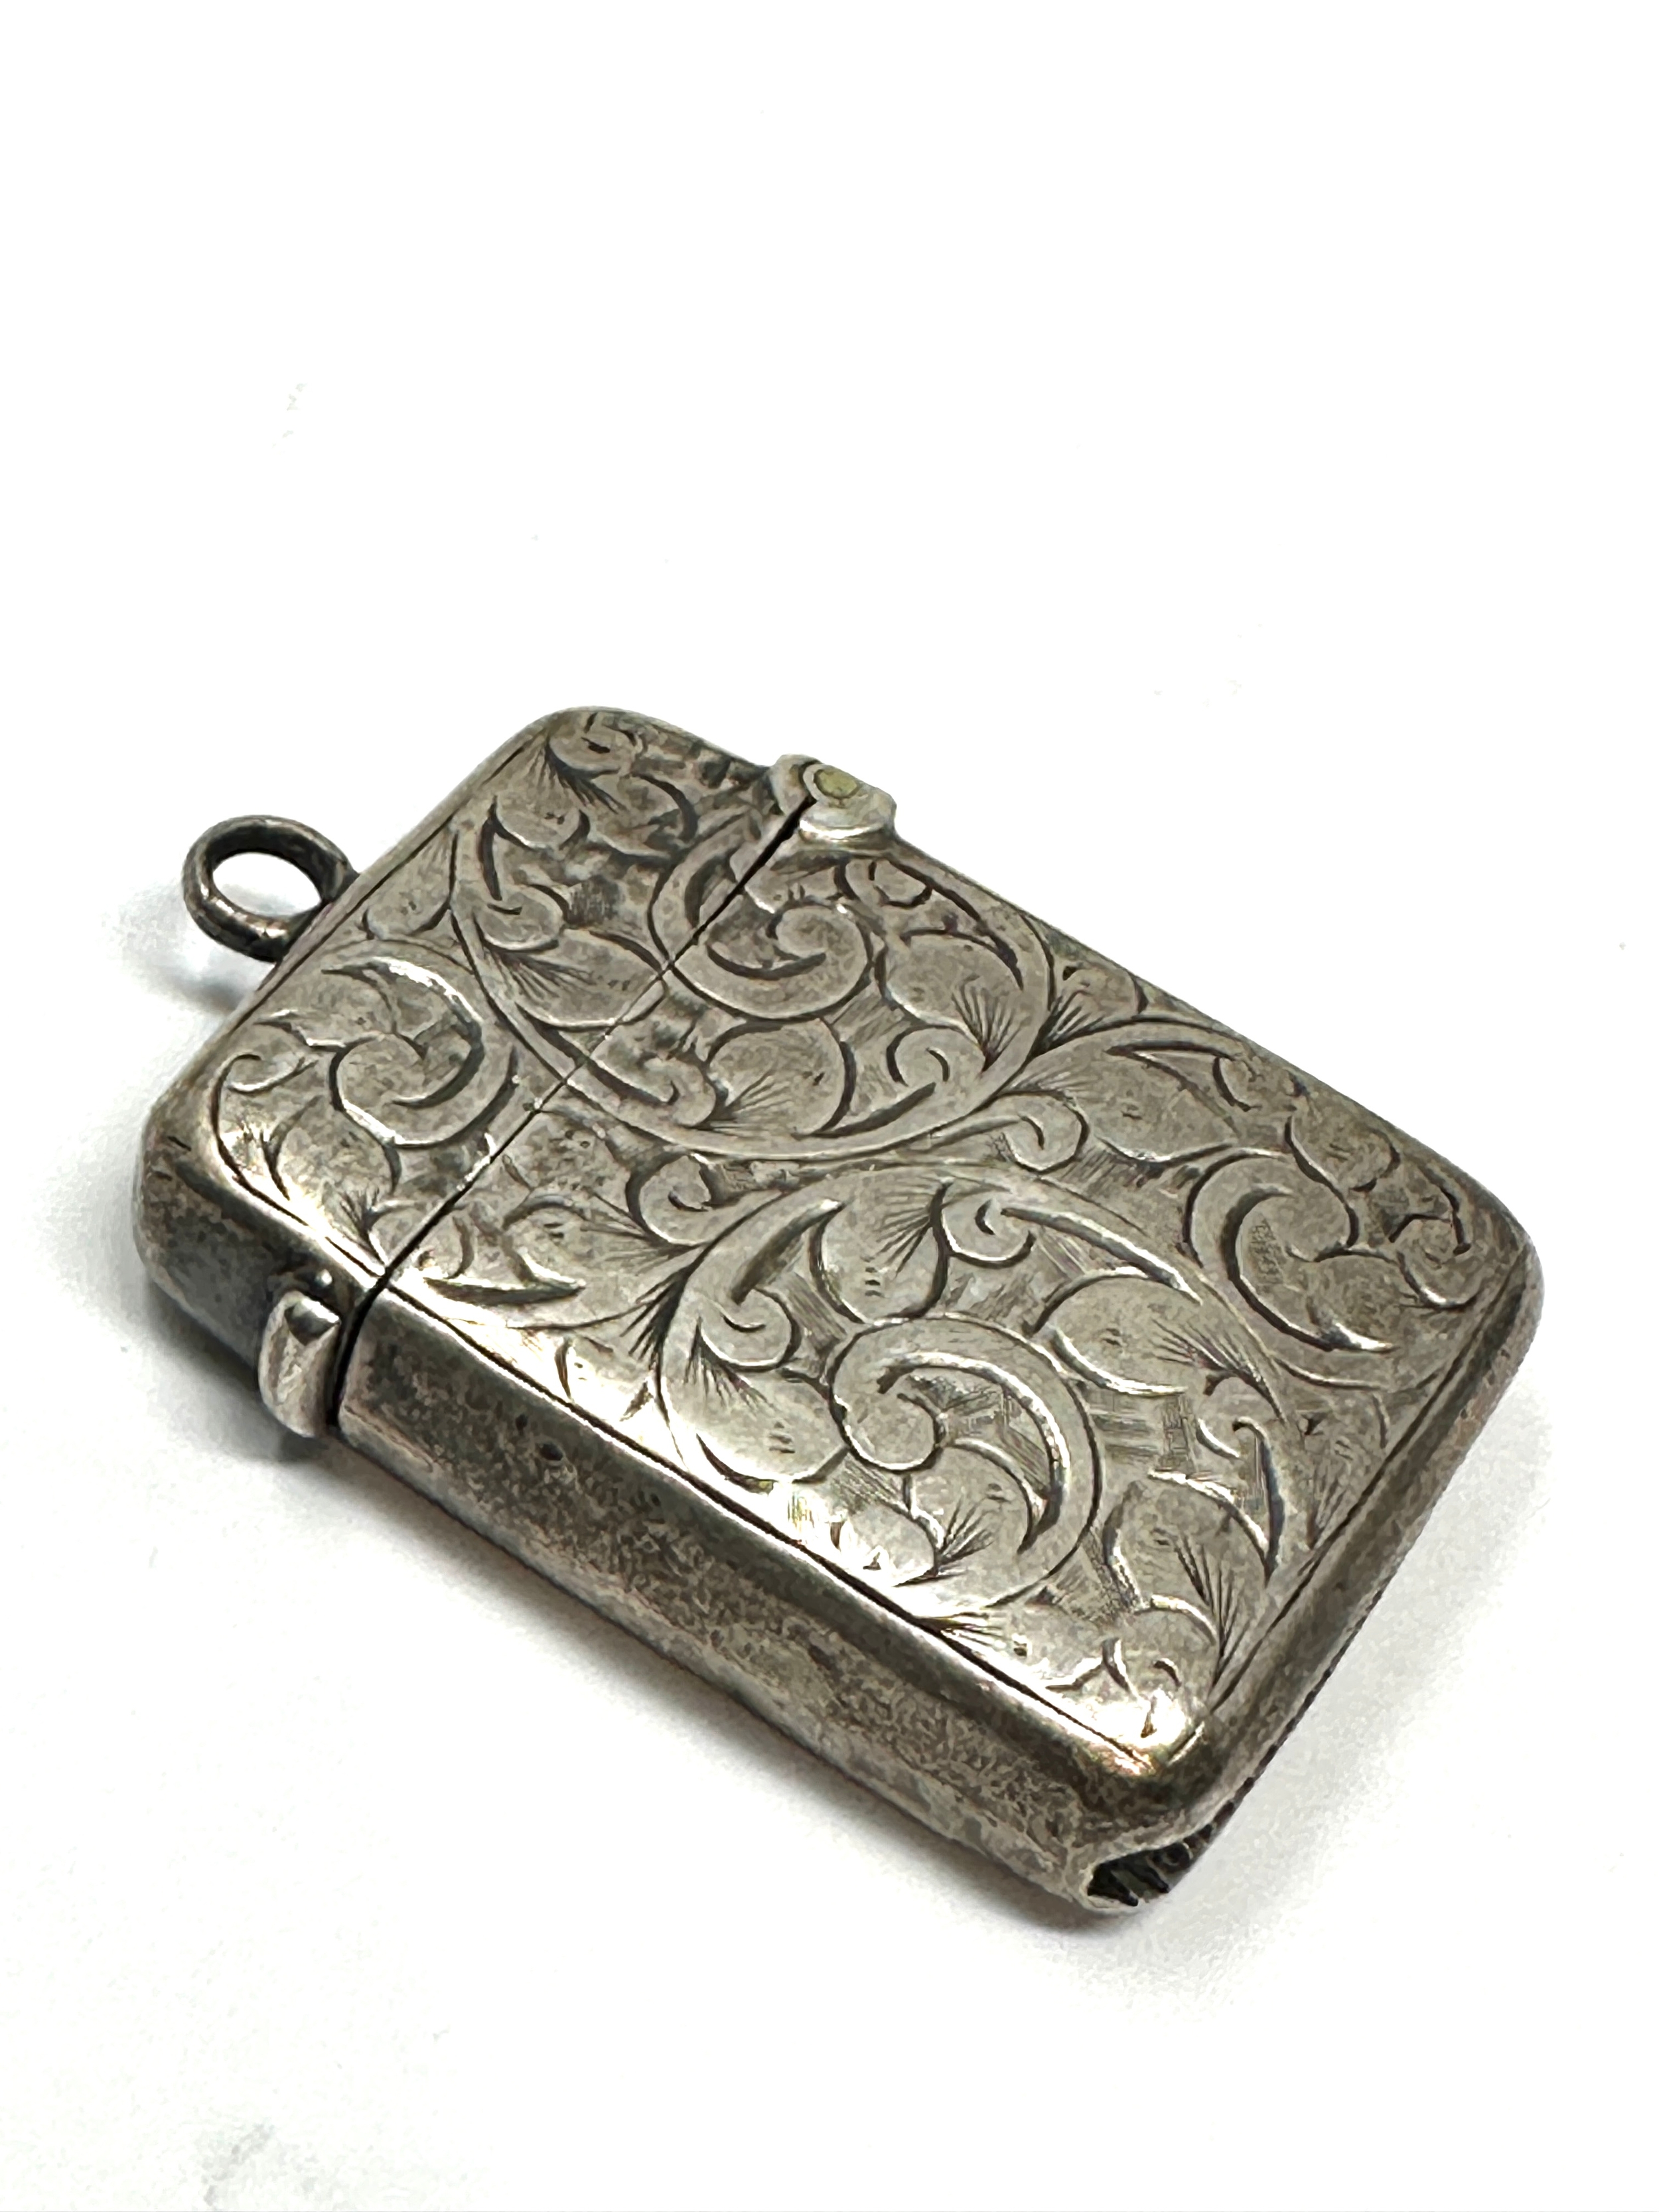 Antique silver vesta case - Image 2 of 4